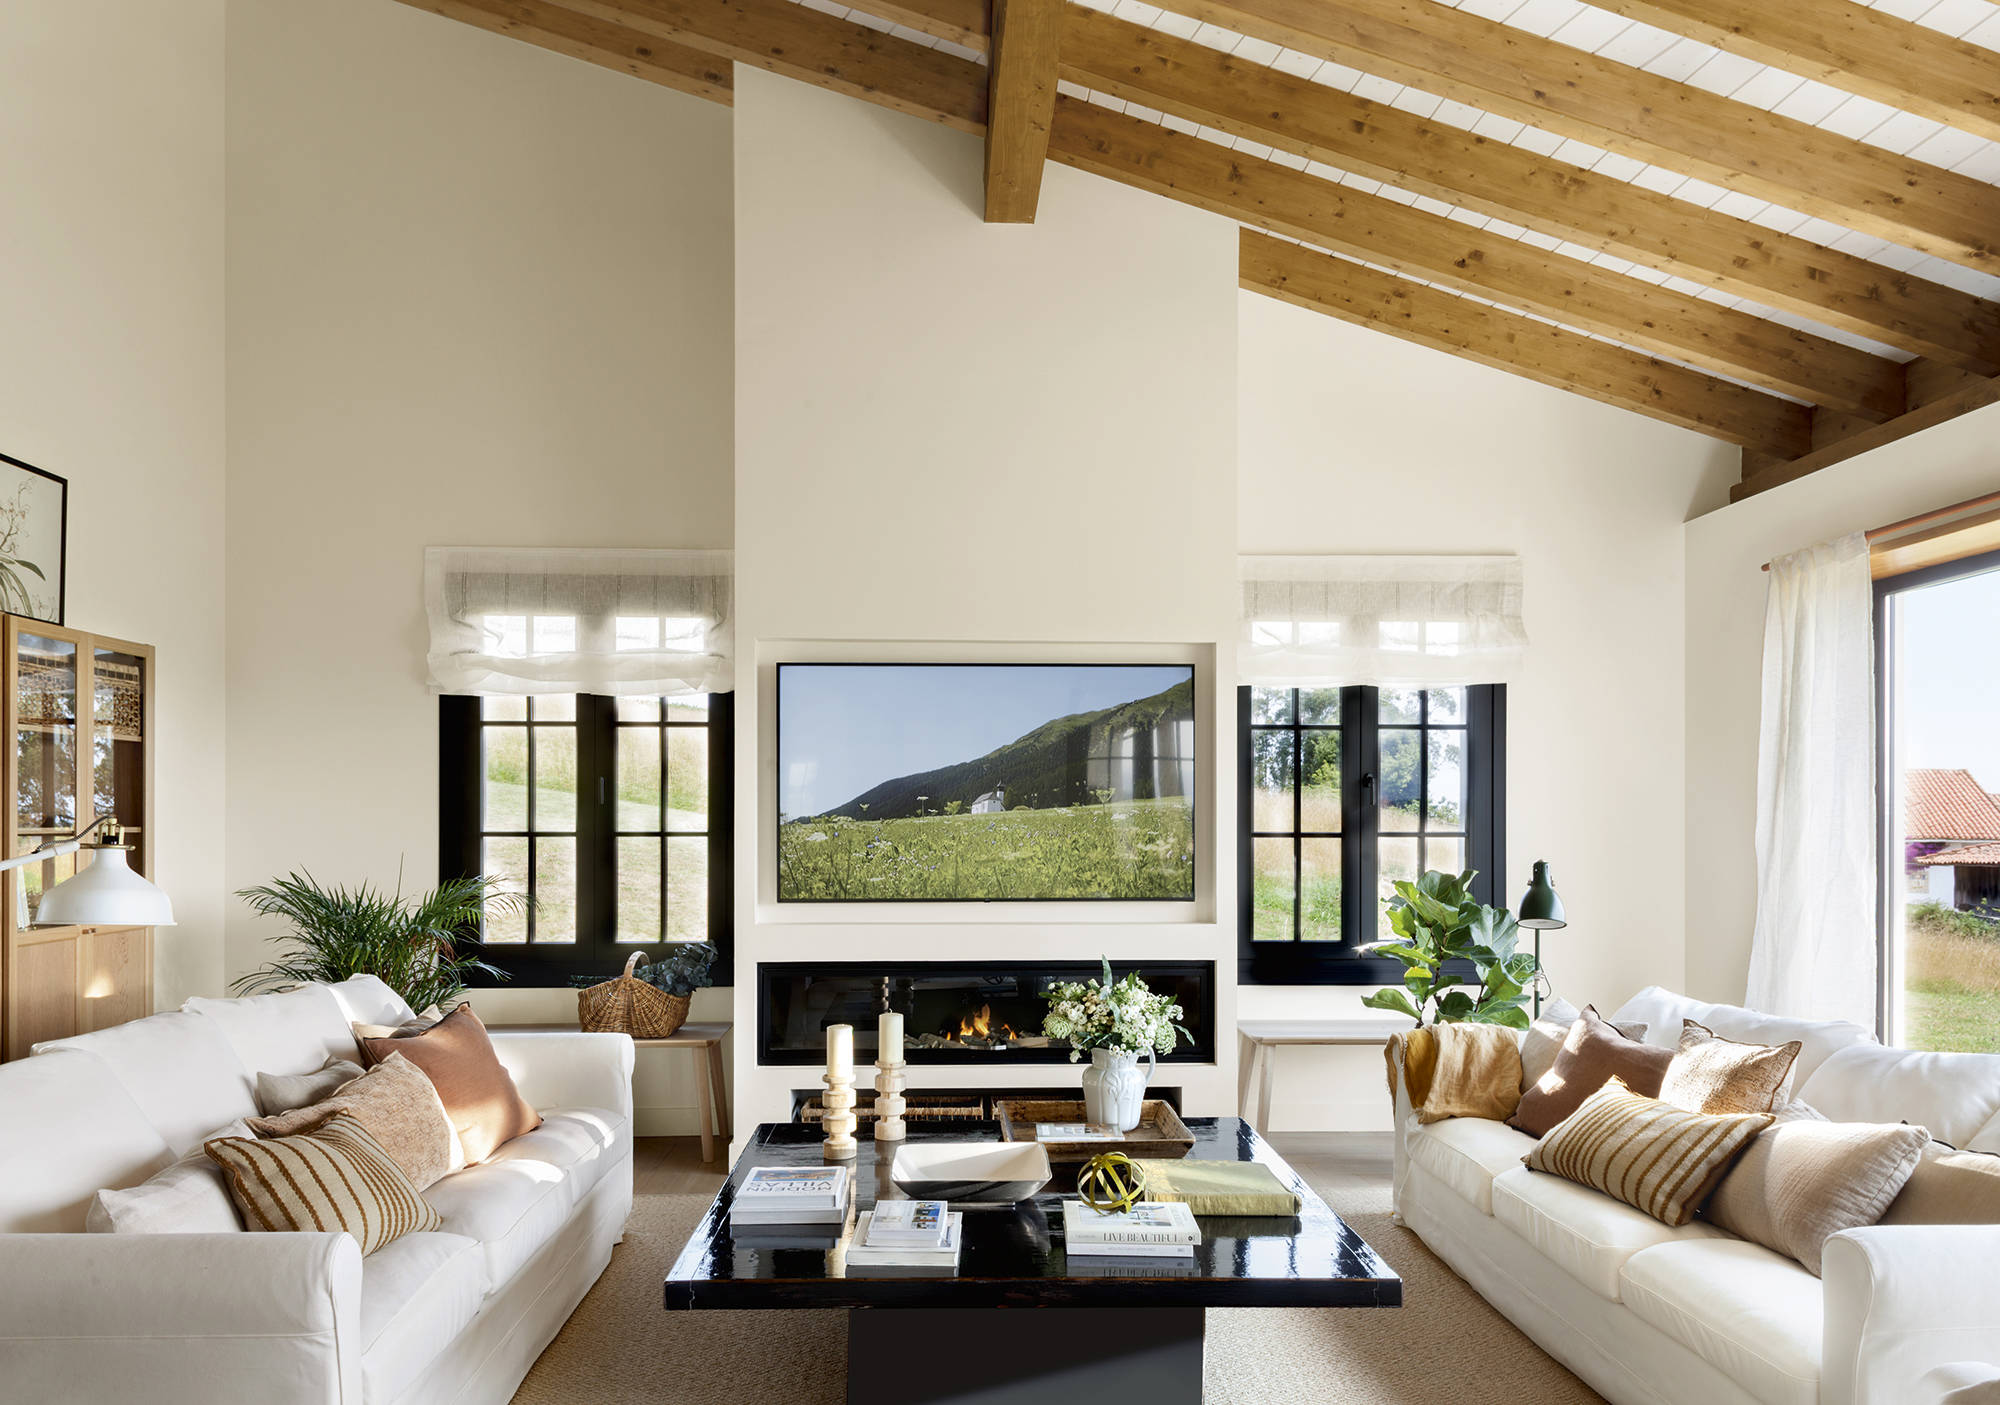 Salón con sofás blancos, mesa de centro negra y chimenea moderna con televisor.